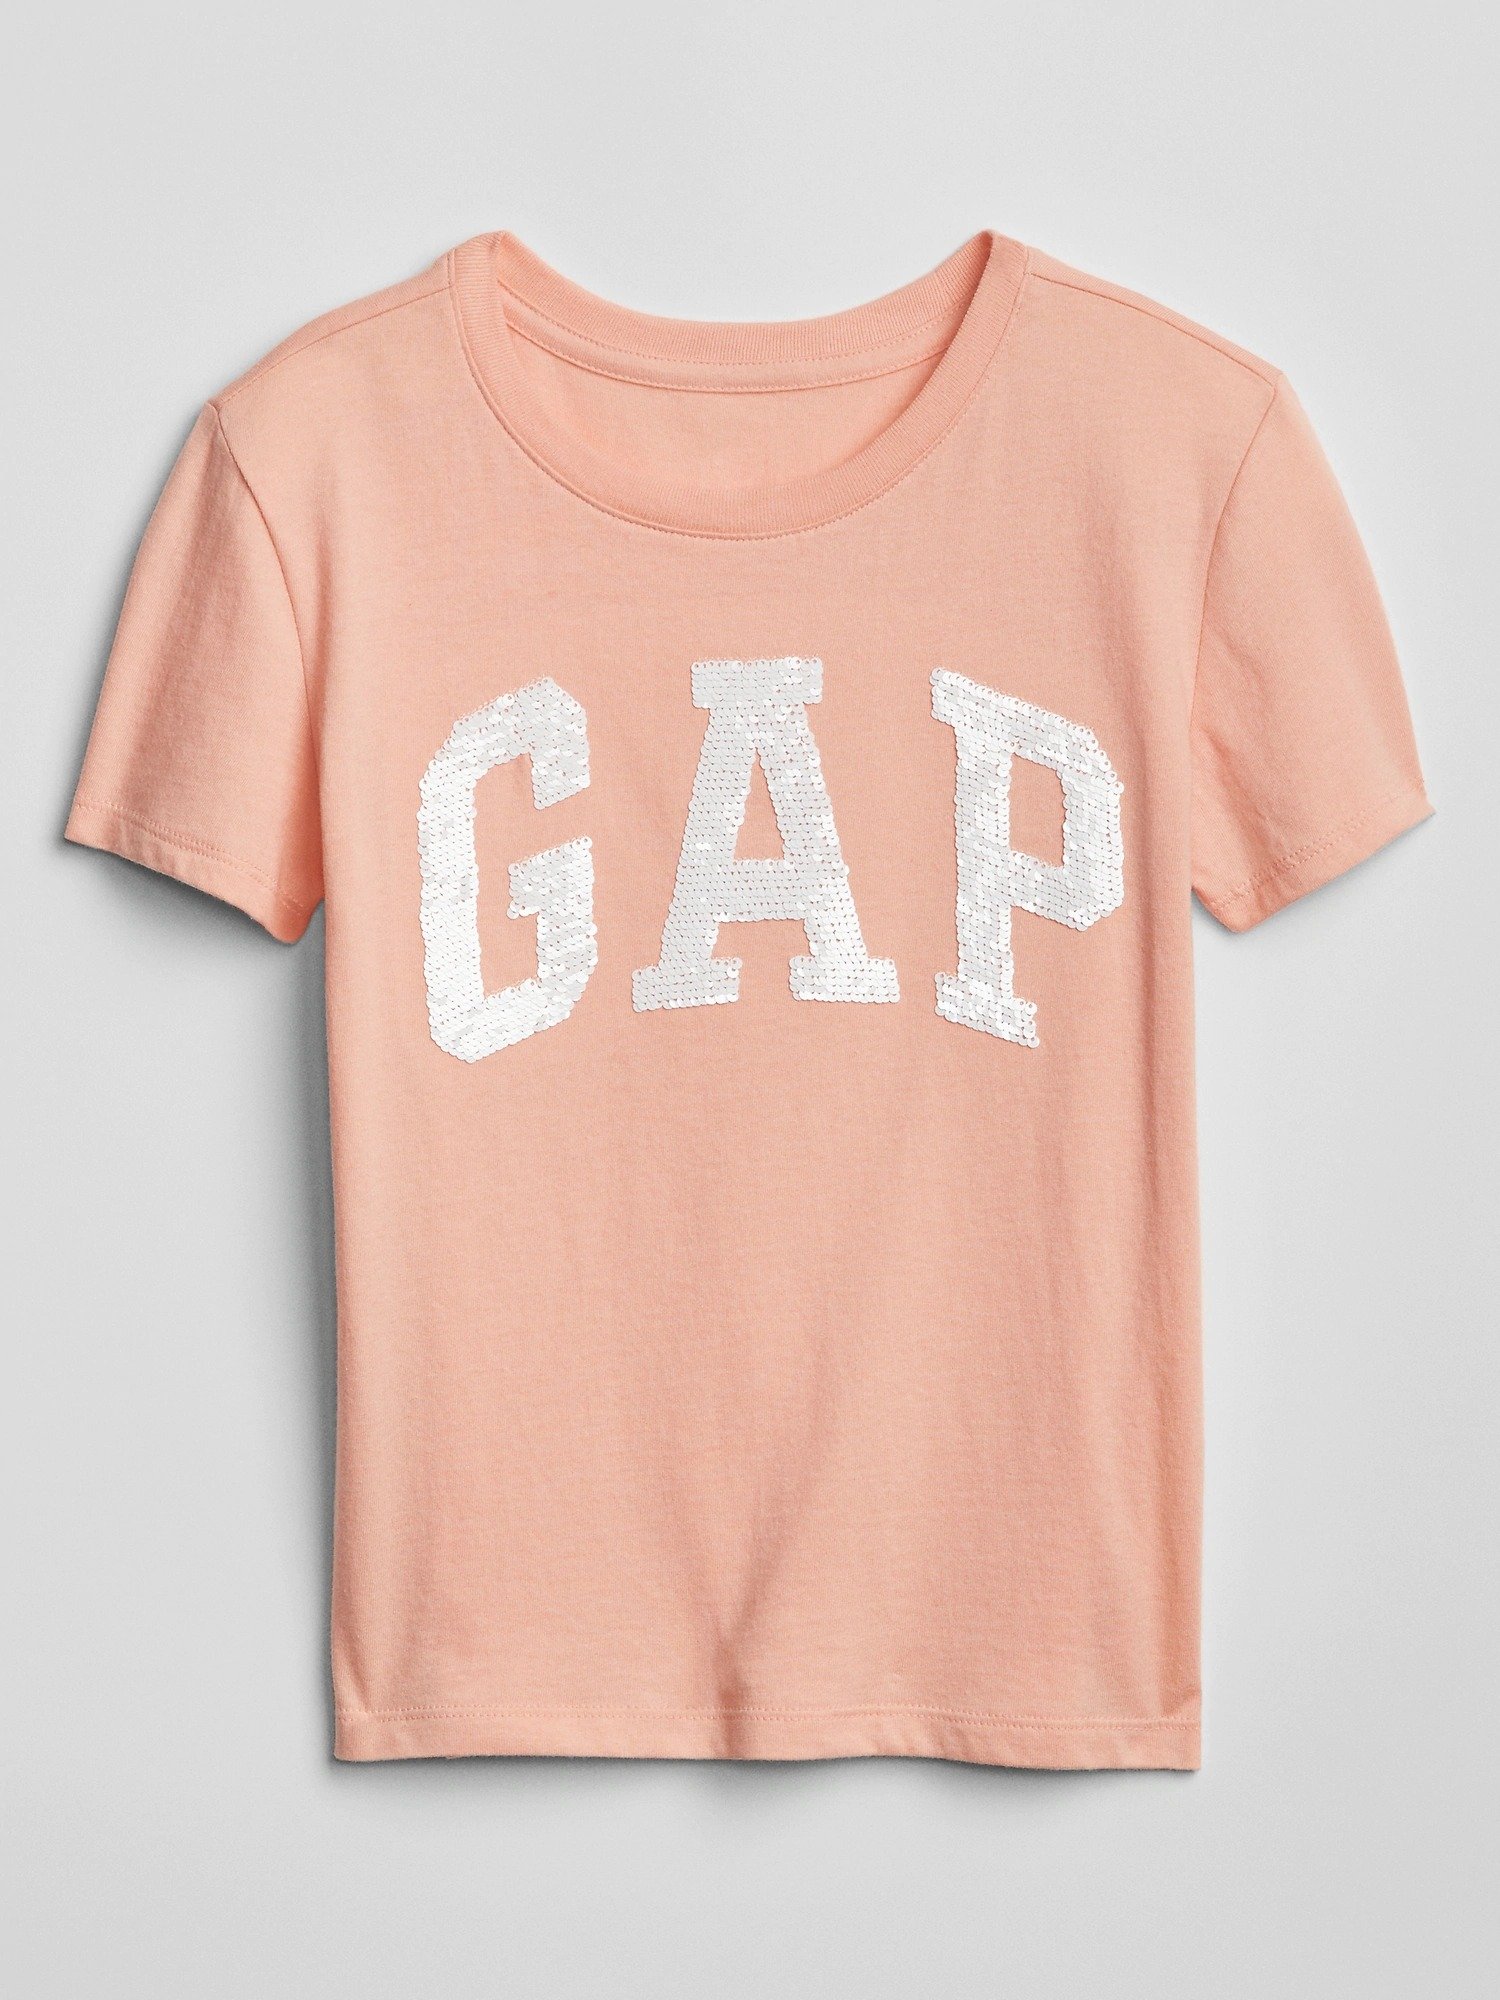 Gap Logo Pullu T-Shirt product image